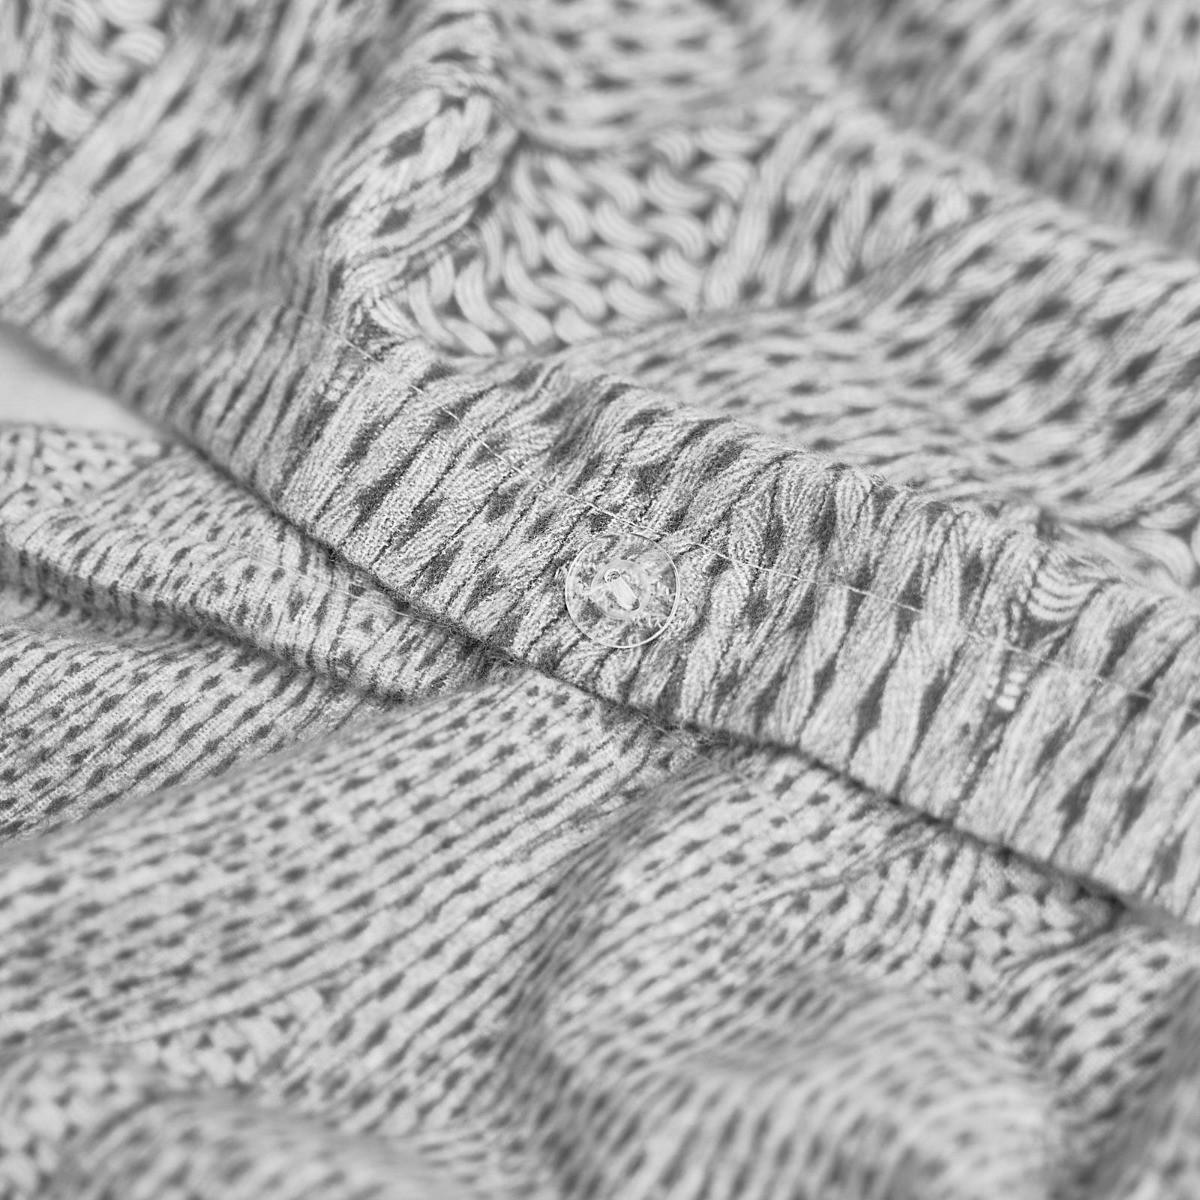 Dreamscene Chunky Knit Print Brushed Cotton Duvet Set - Grey >